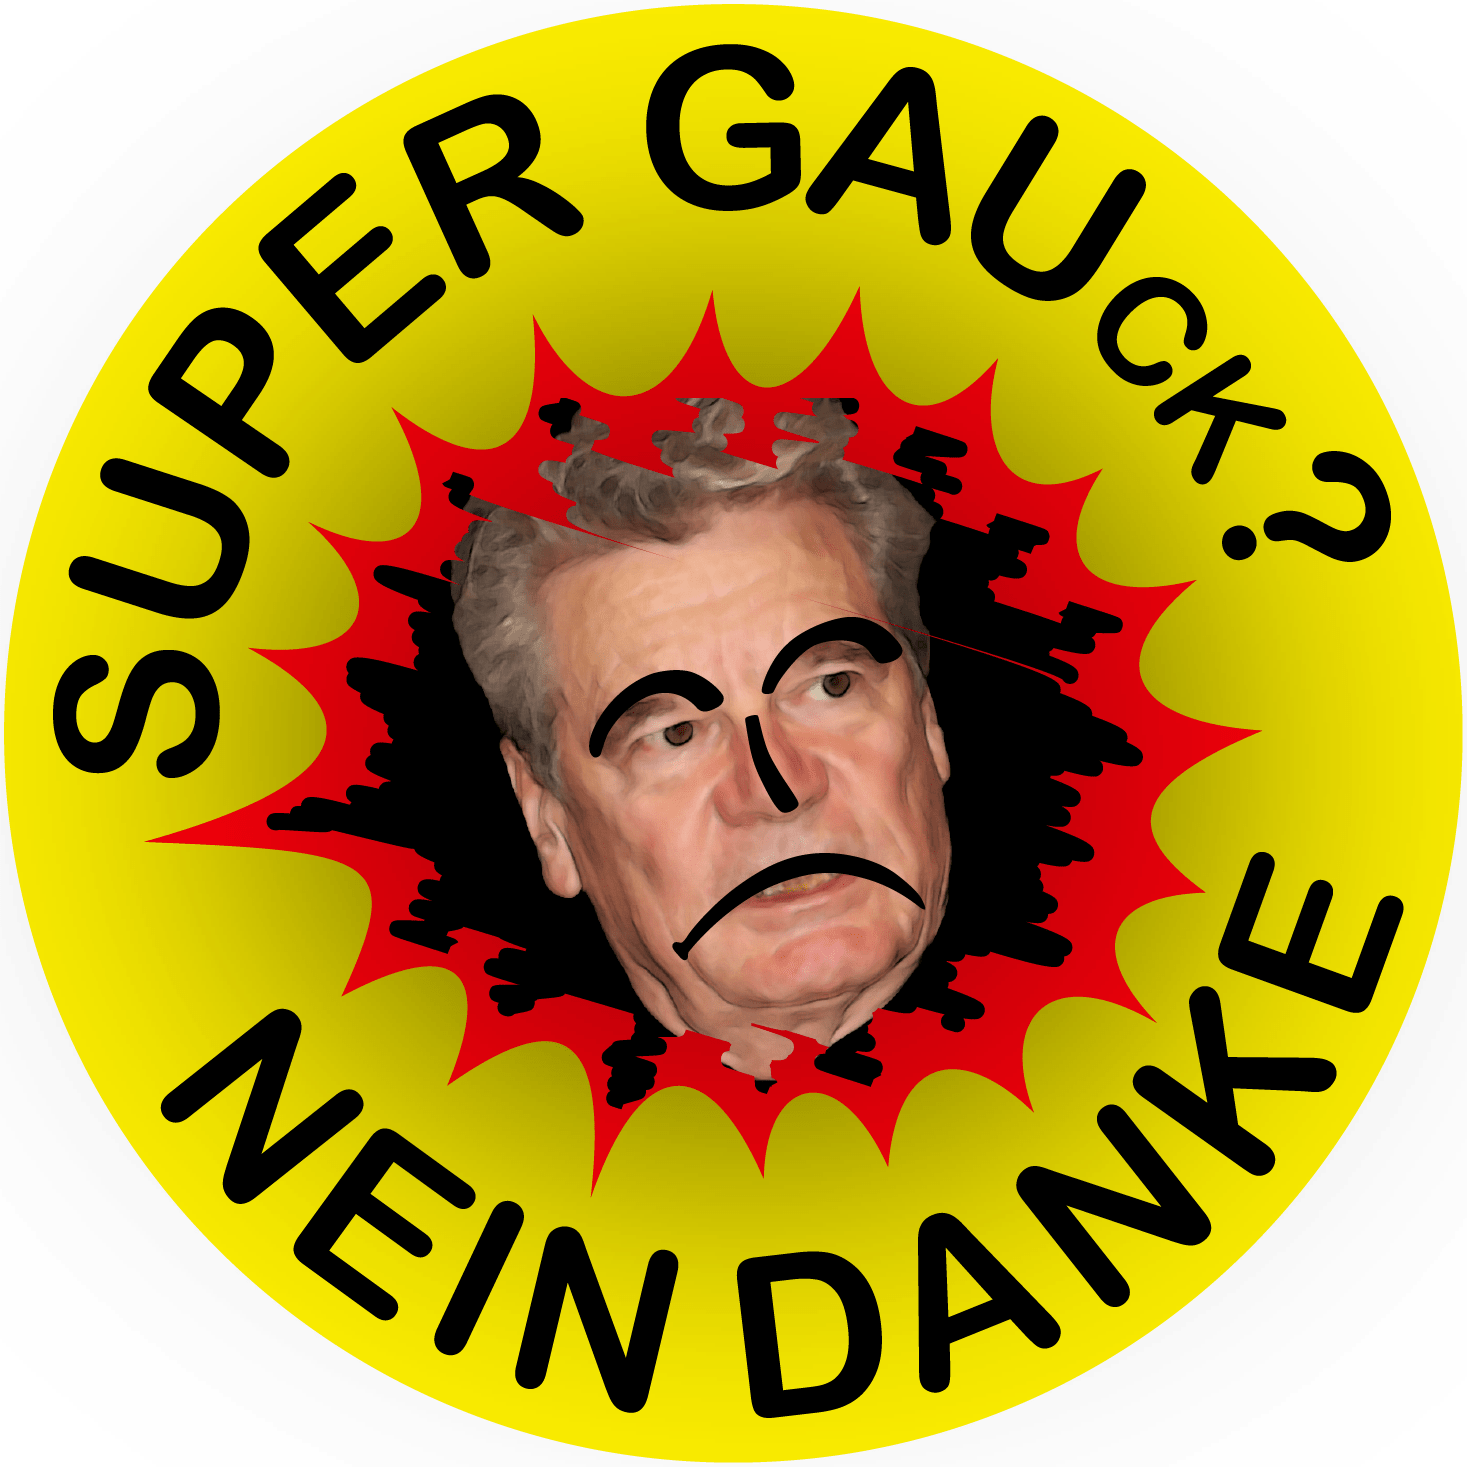 Super Gauck nein Danke